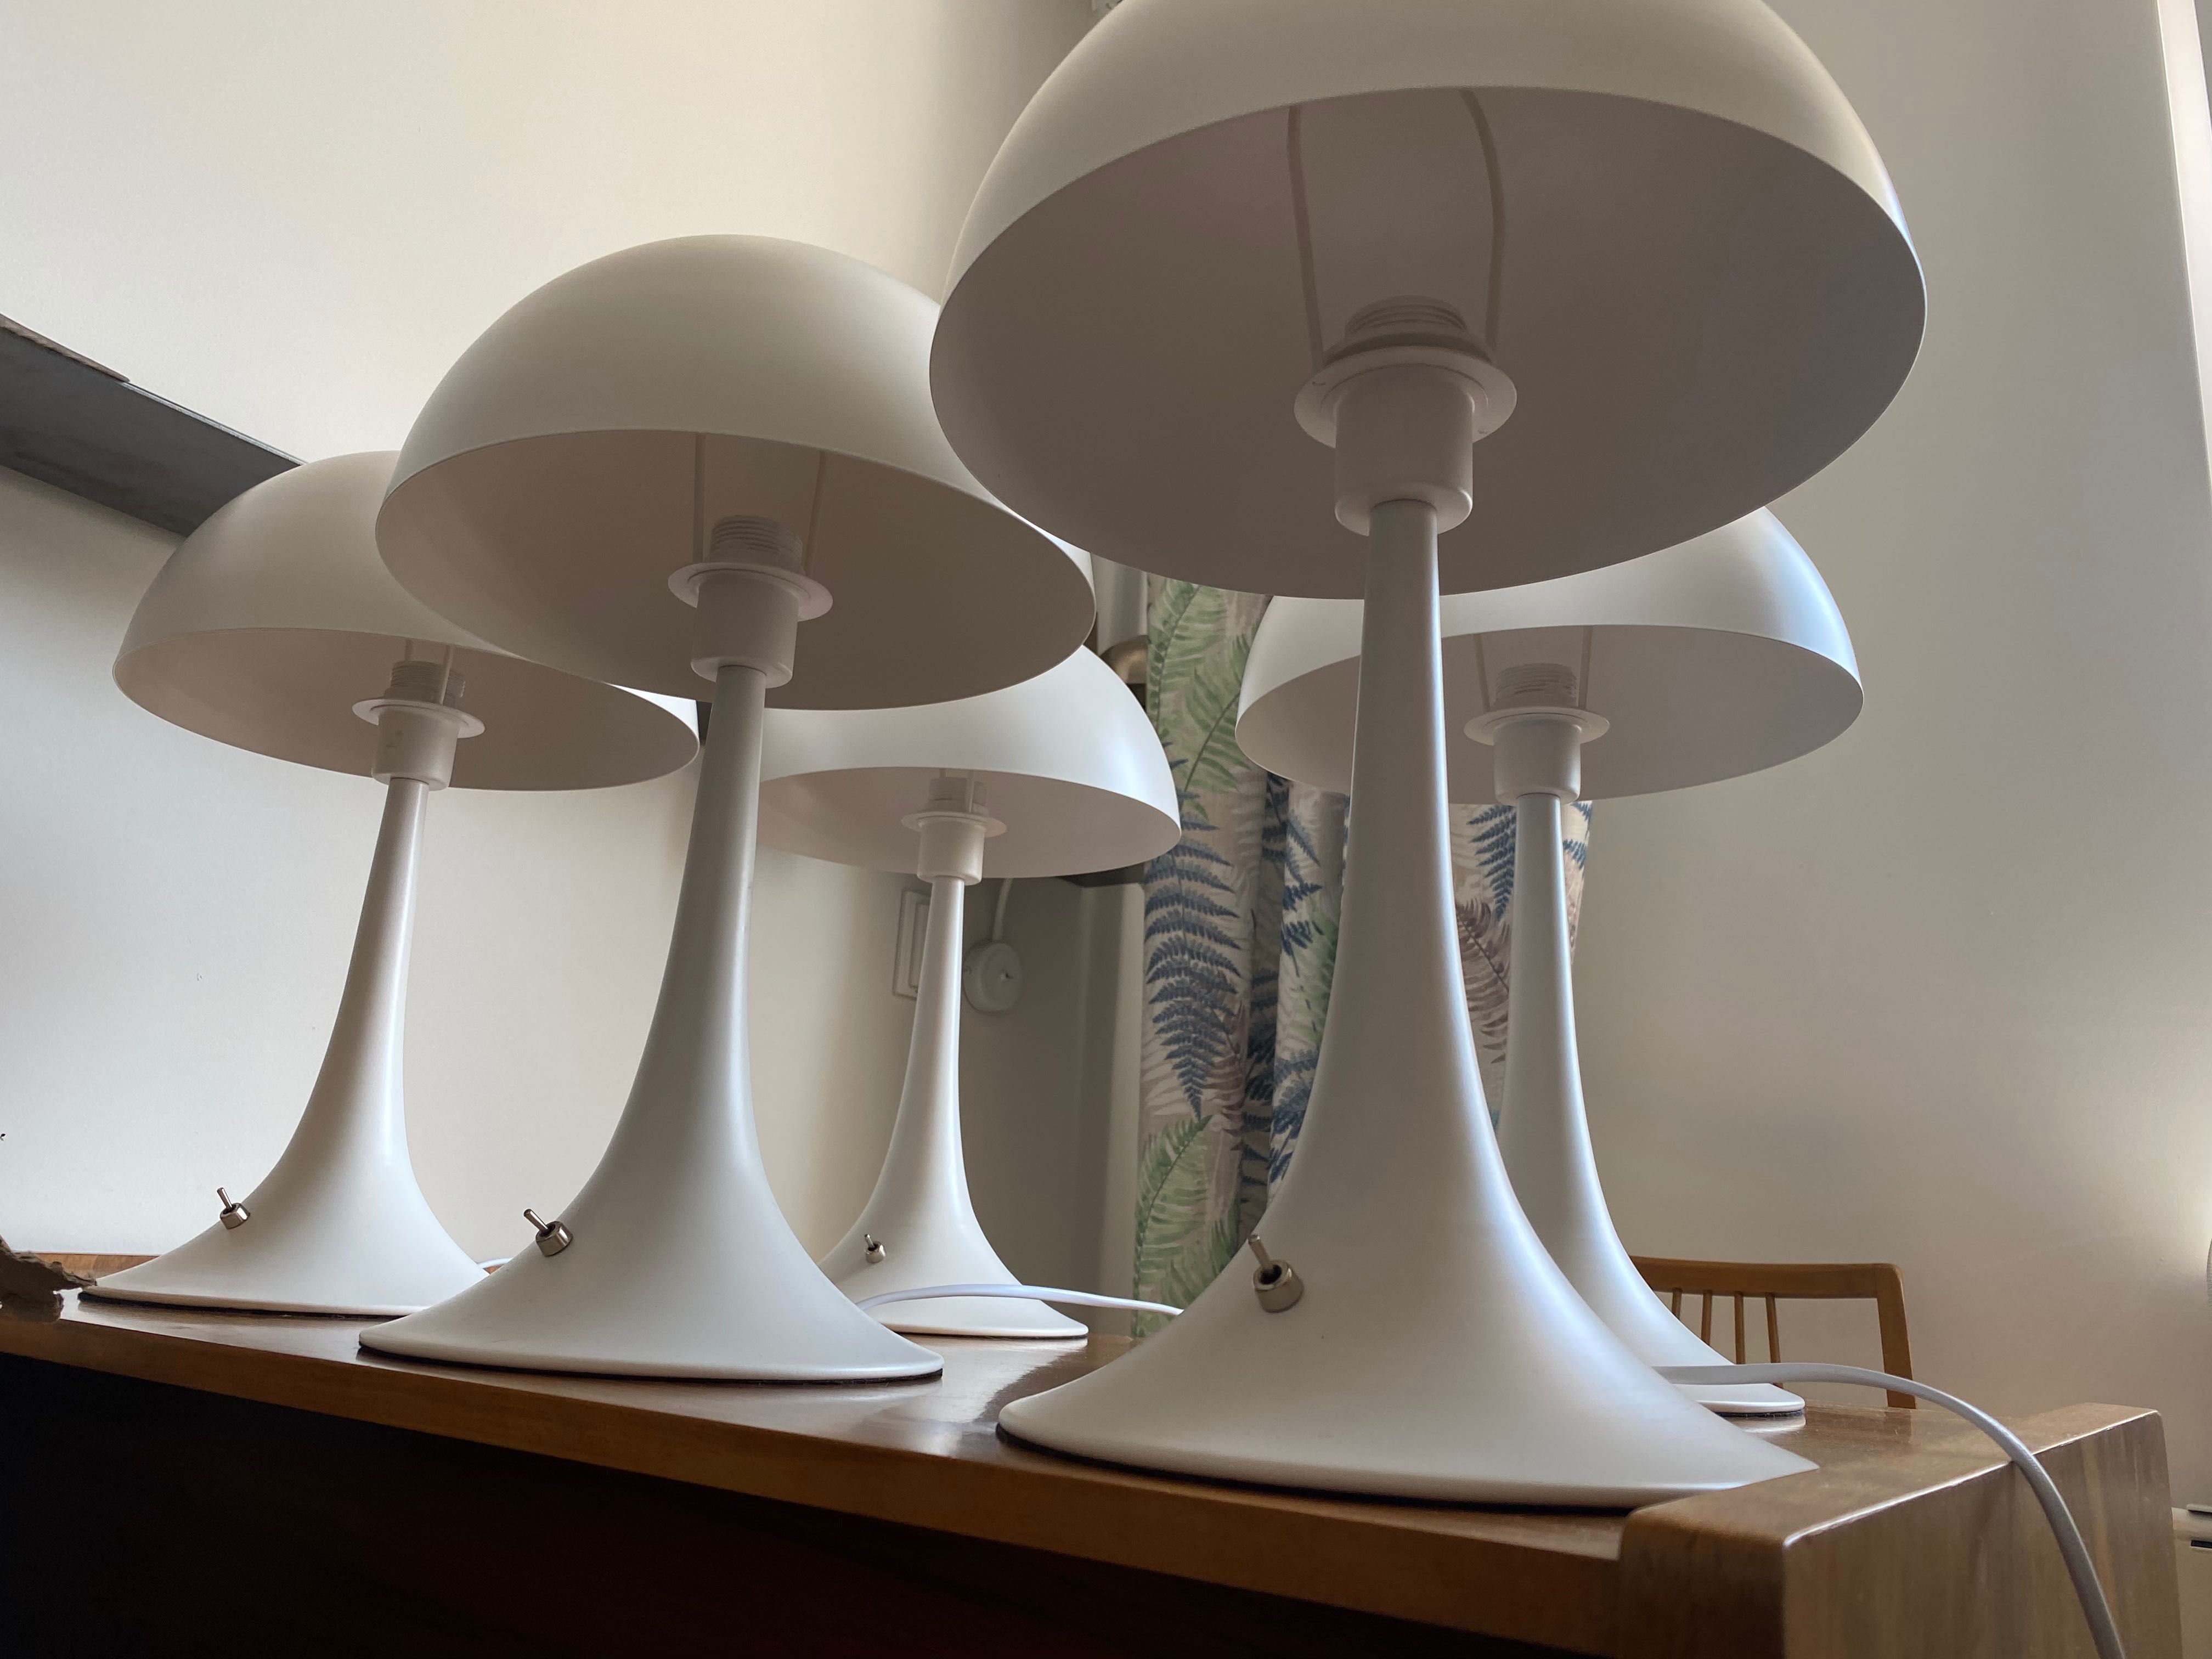 Duńska Lampa typu grzybek - biurkowa